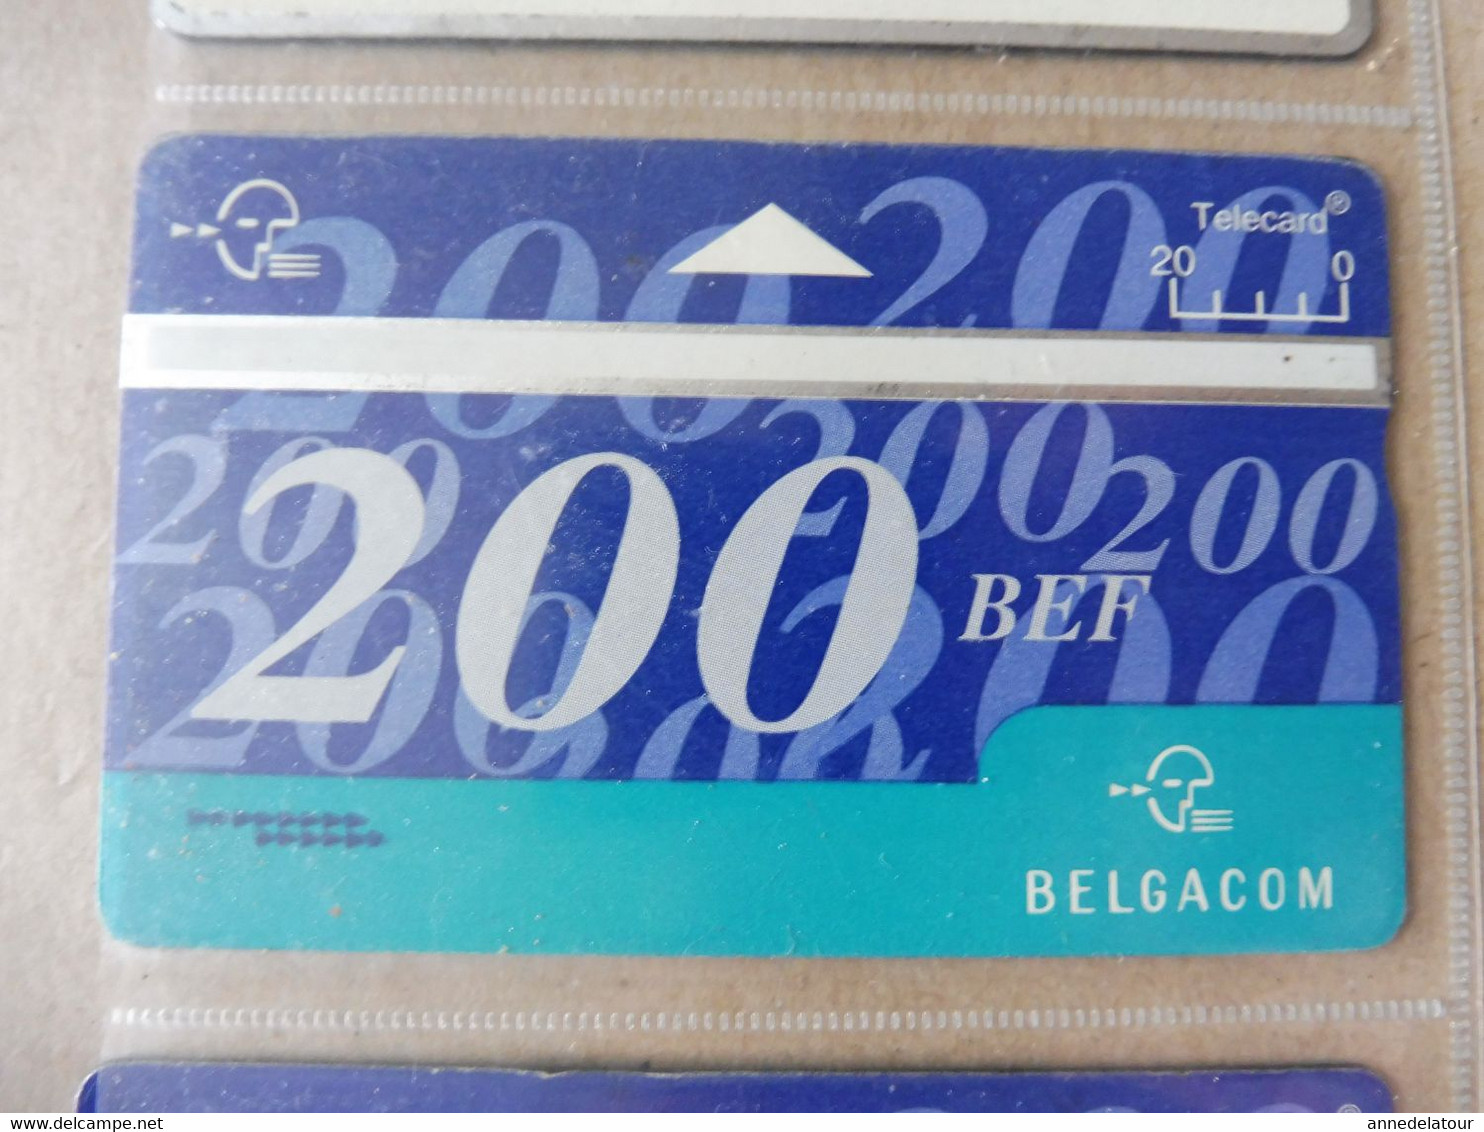 10 télécartes (cartes téléphoniques)  Telecard  BELGACOM ,  origine Belgique